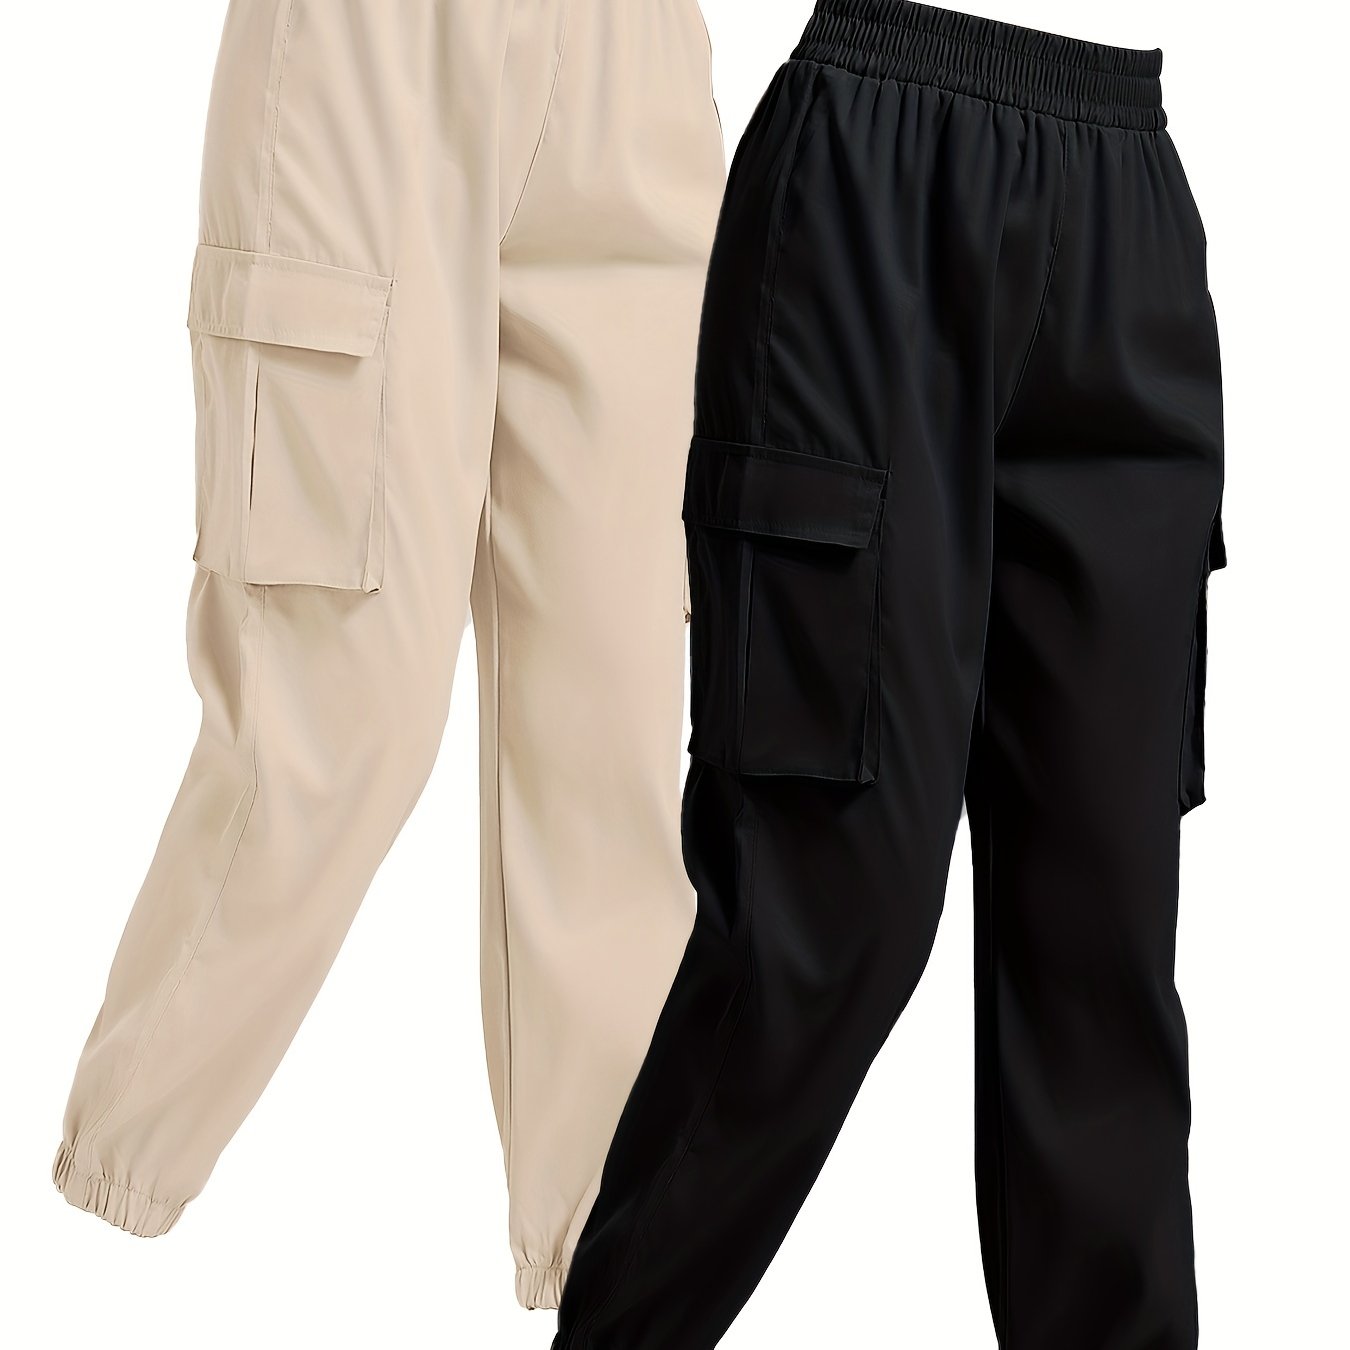 Solid Jogger Cargo Pants 2 Pack, Casual Flap Pocket Elastic Waist Pants, Women's Clothing